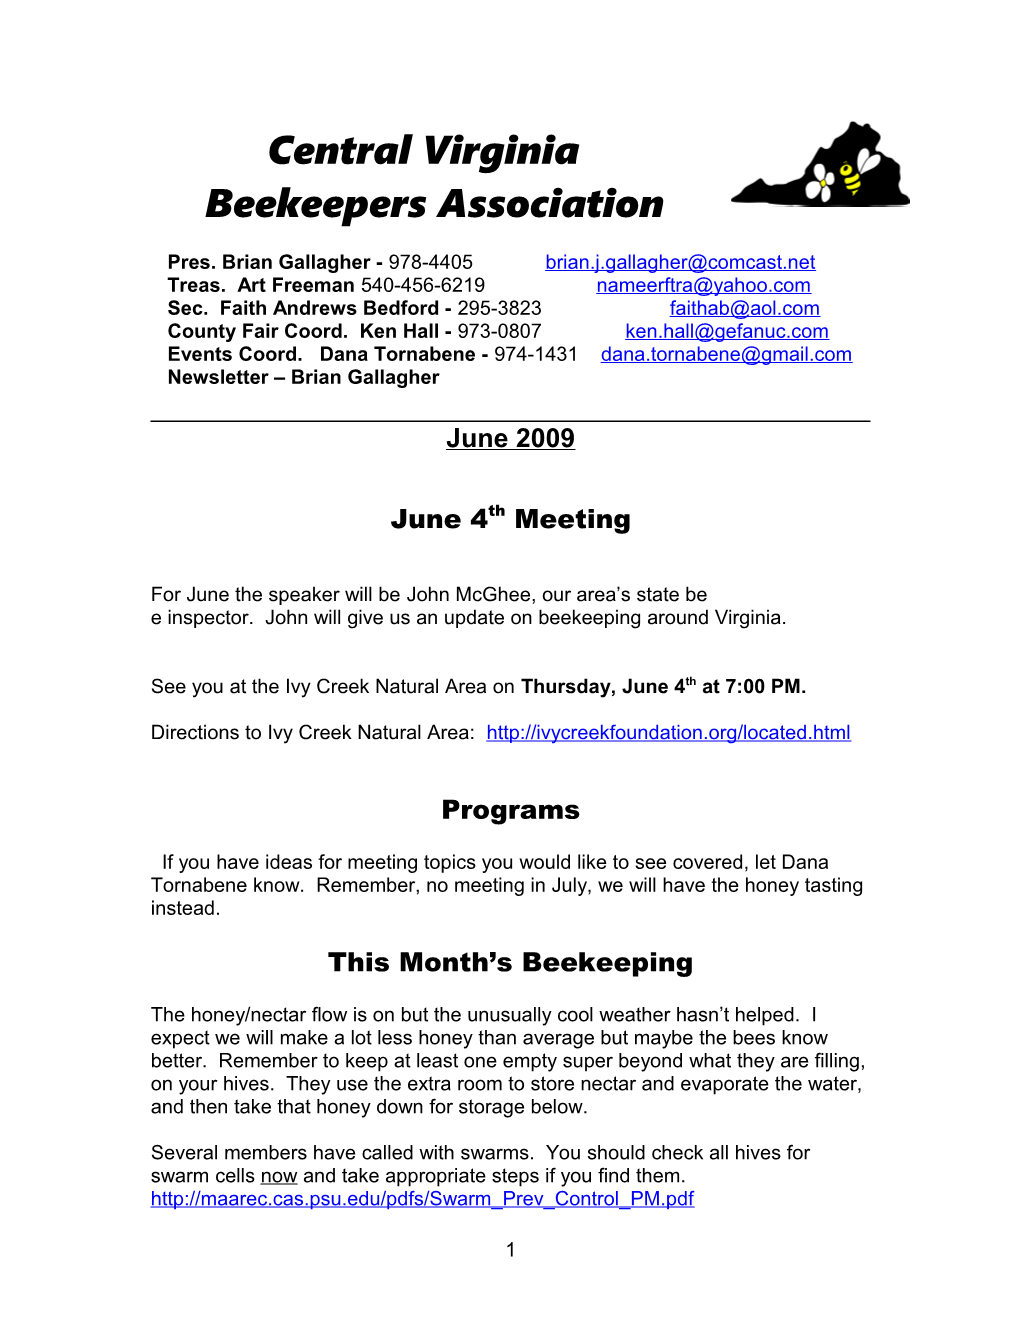 Central Virginia Beekeepers Newsletter